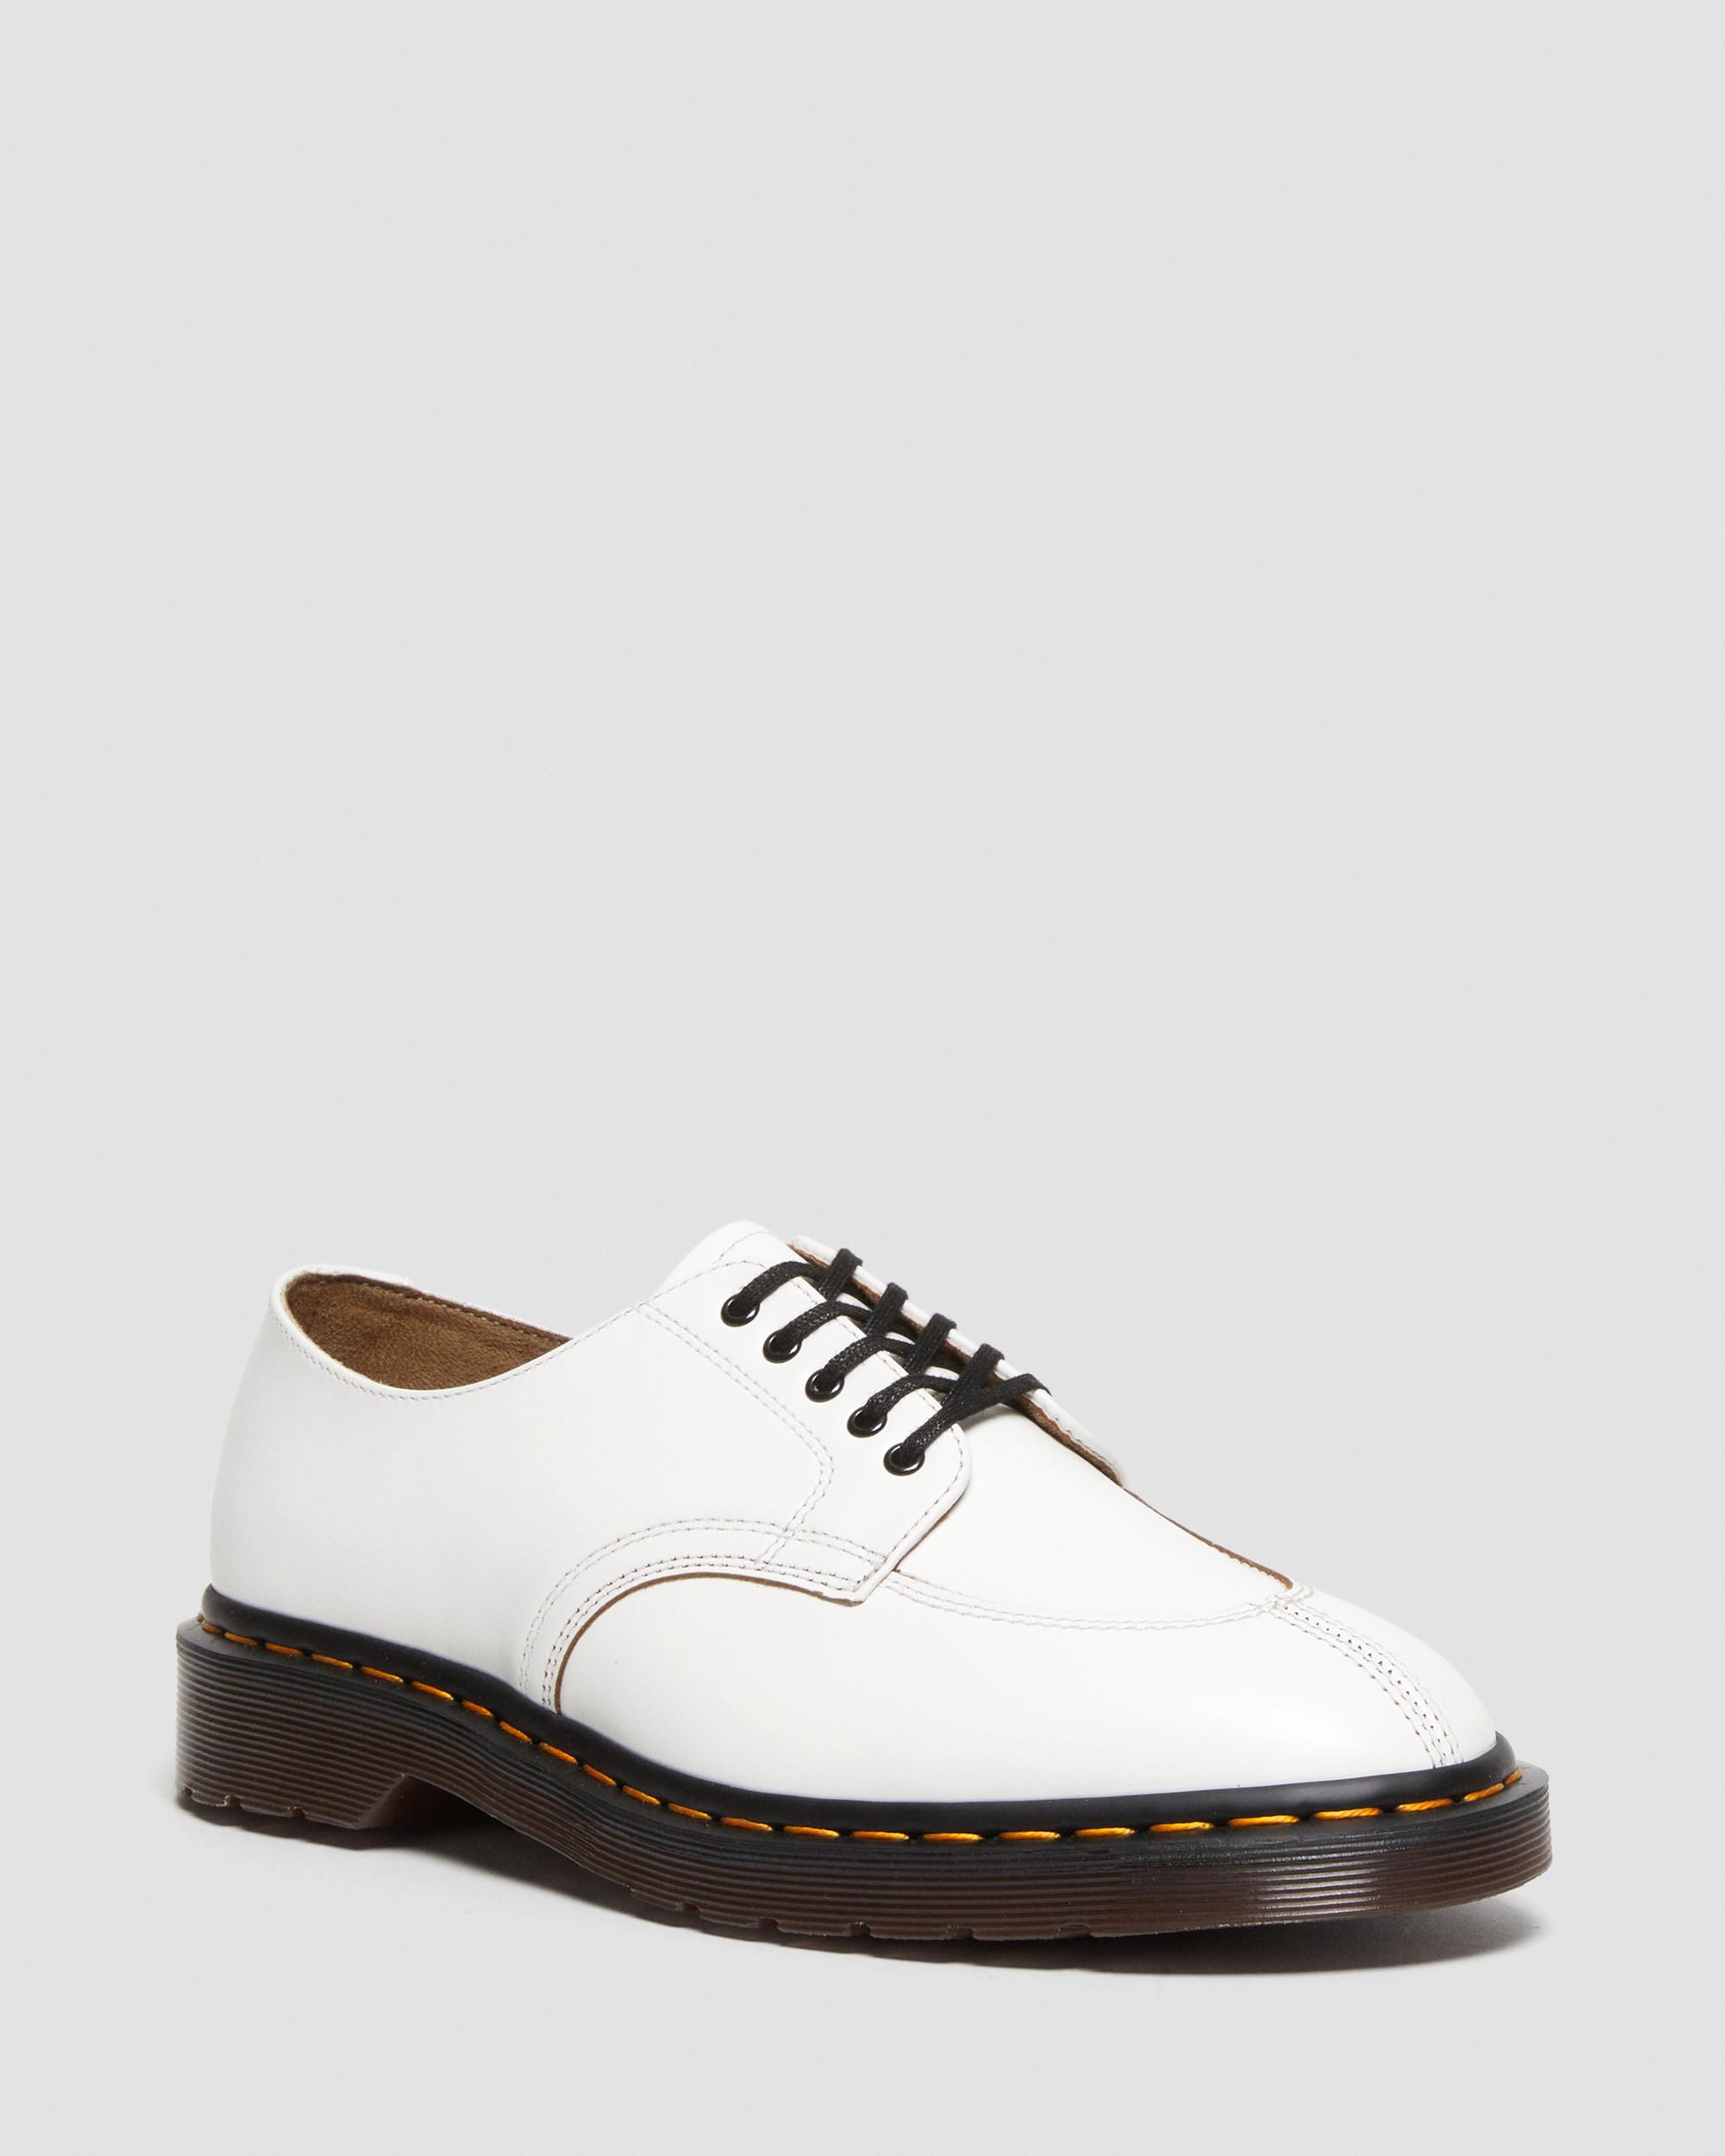 2046 Vintage Smooth Leather Oxford ShoesScarpe di pelle Smooth 2046 vintage Dr. Martens